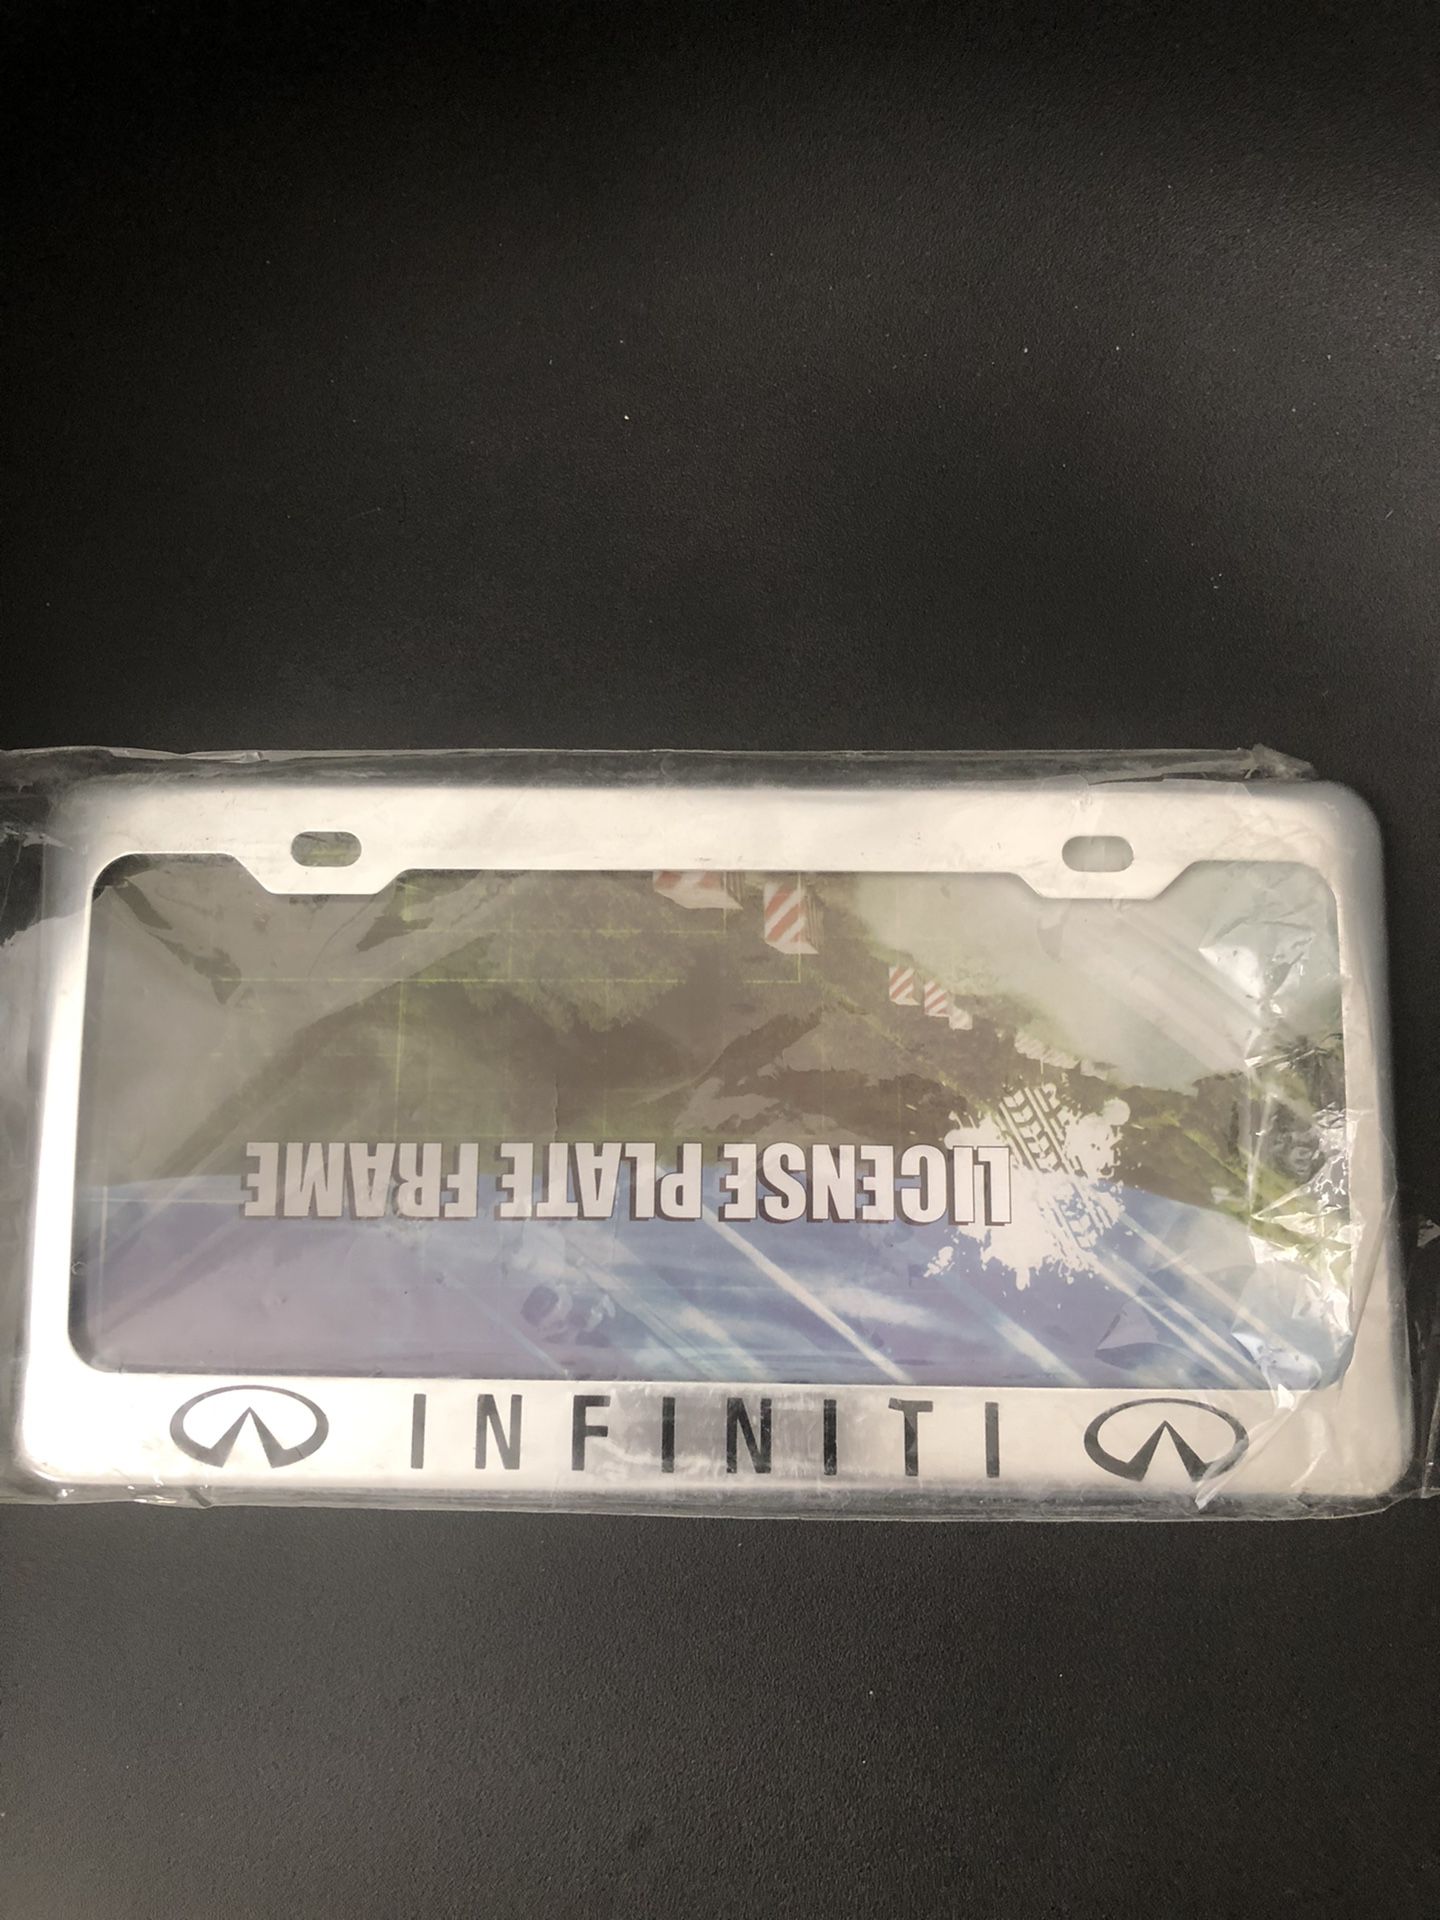 Infiniti License Plate Cover